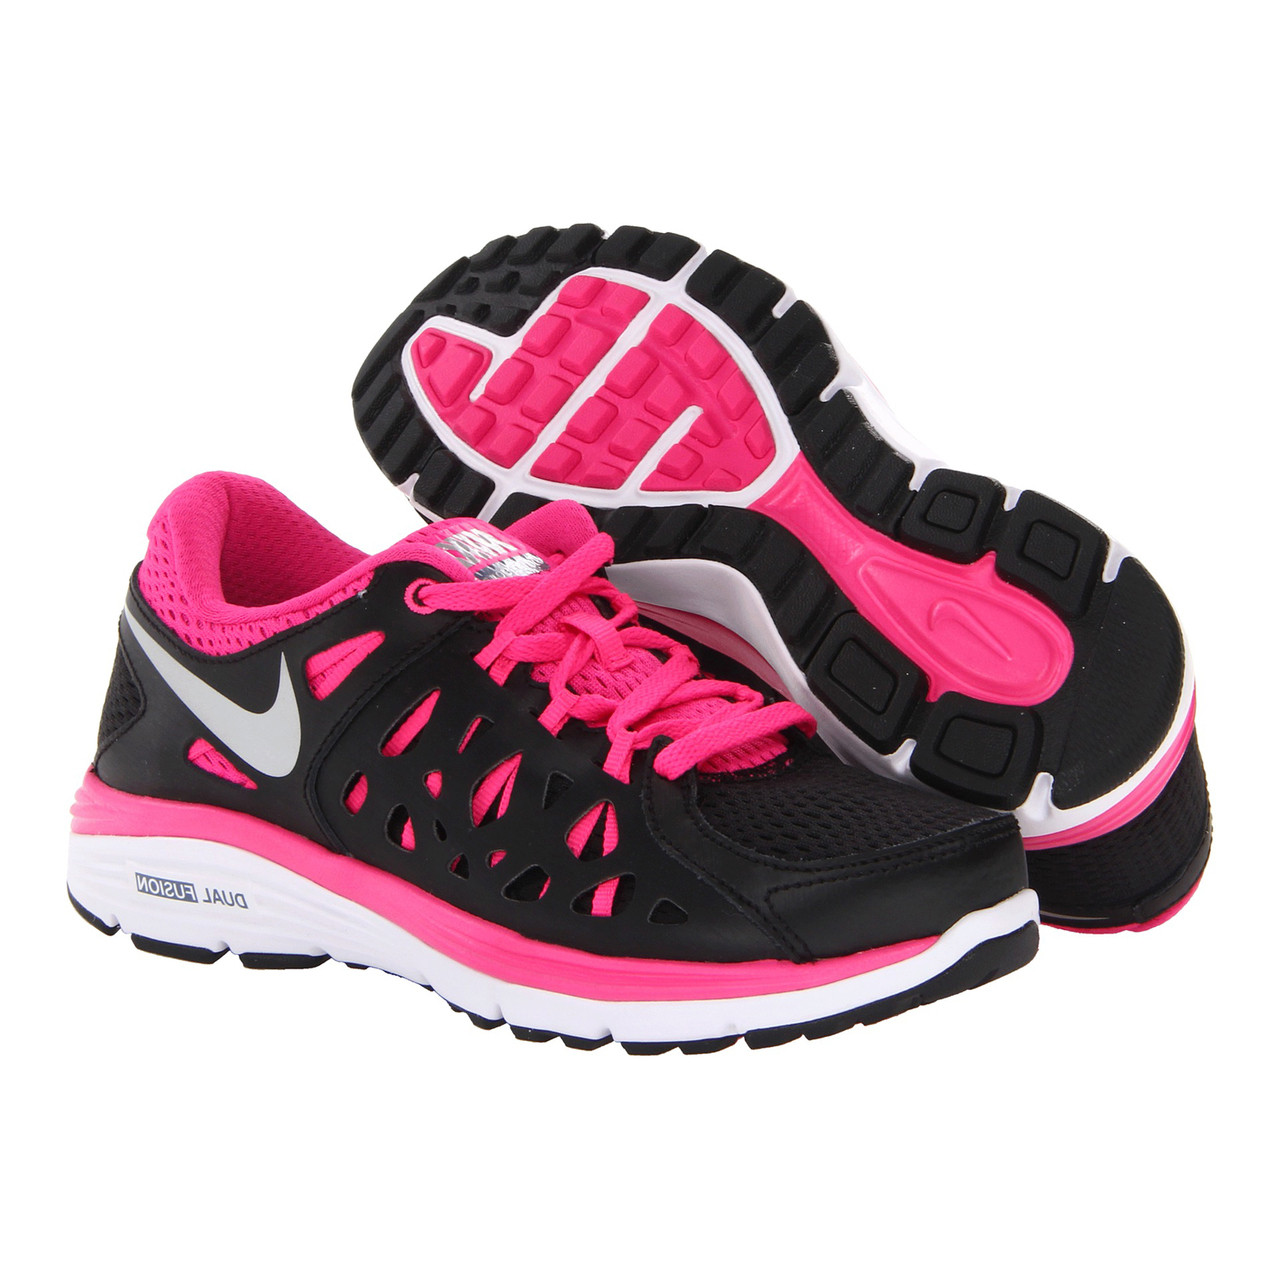 Nike Dual Fusion Run 2 Black/Pink Ladies Running Shoes - Black/Slate/Pink Foil/Metallic Silver | Discount Nike Ladies Athletic More - Shoolu.com | Shoolu.com